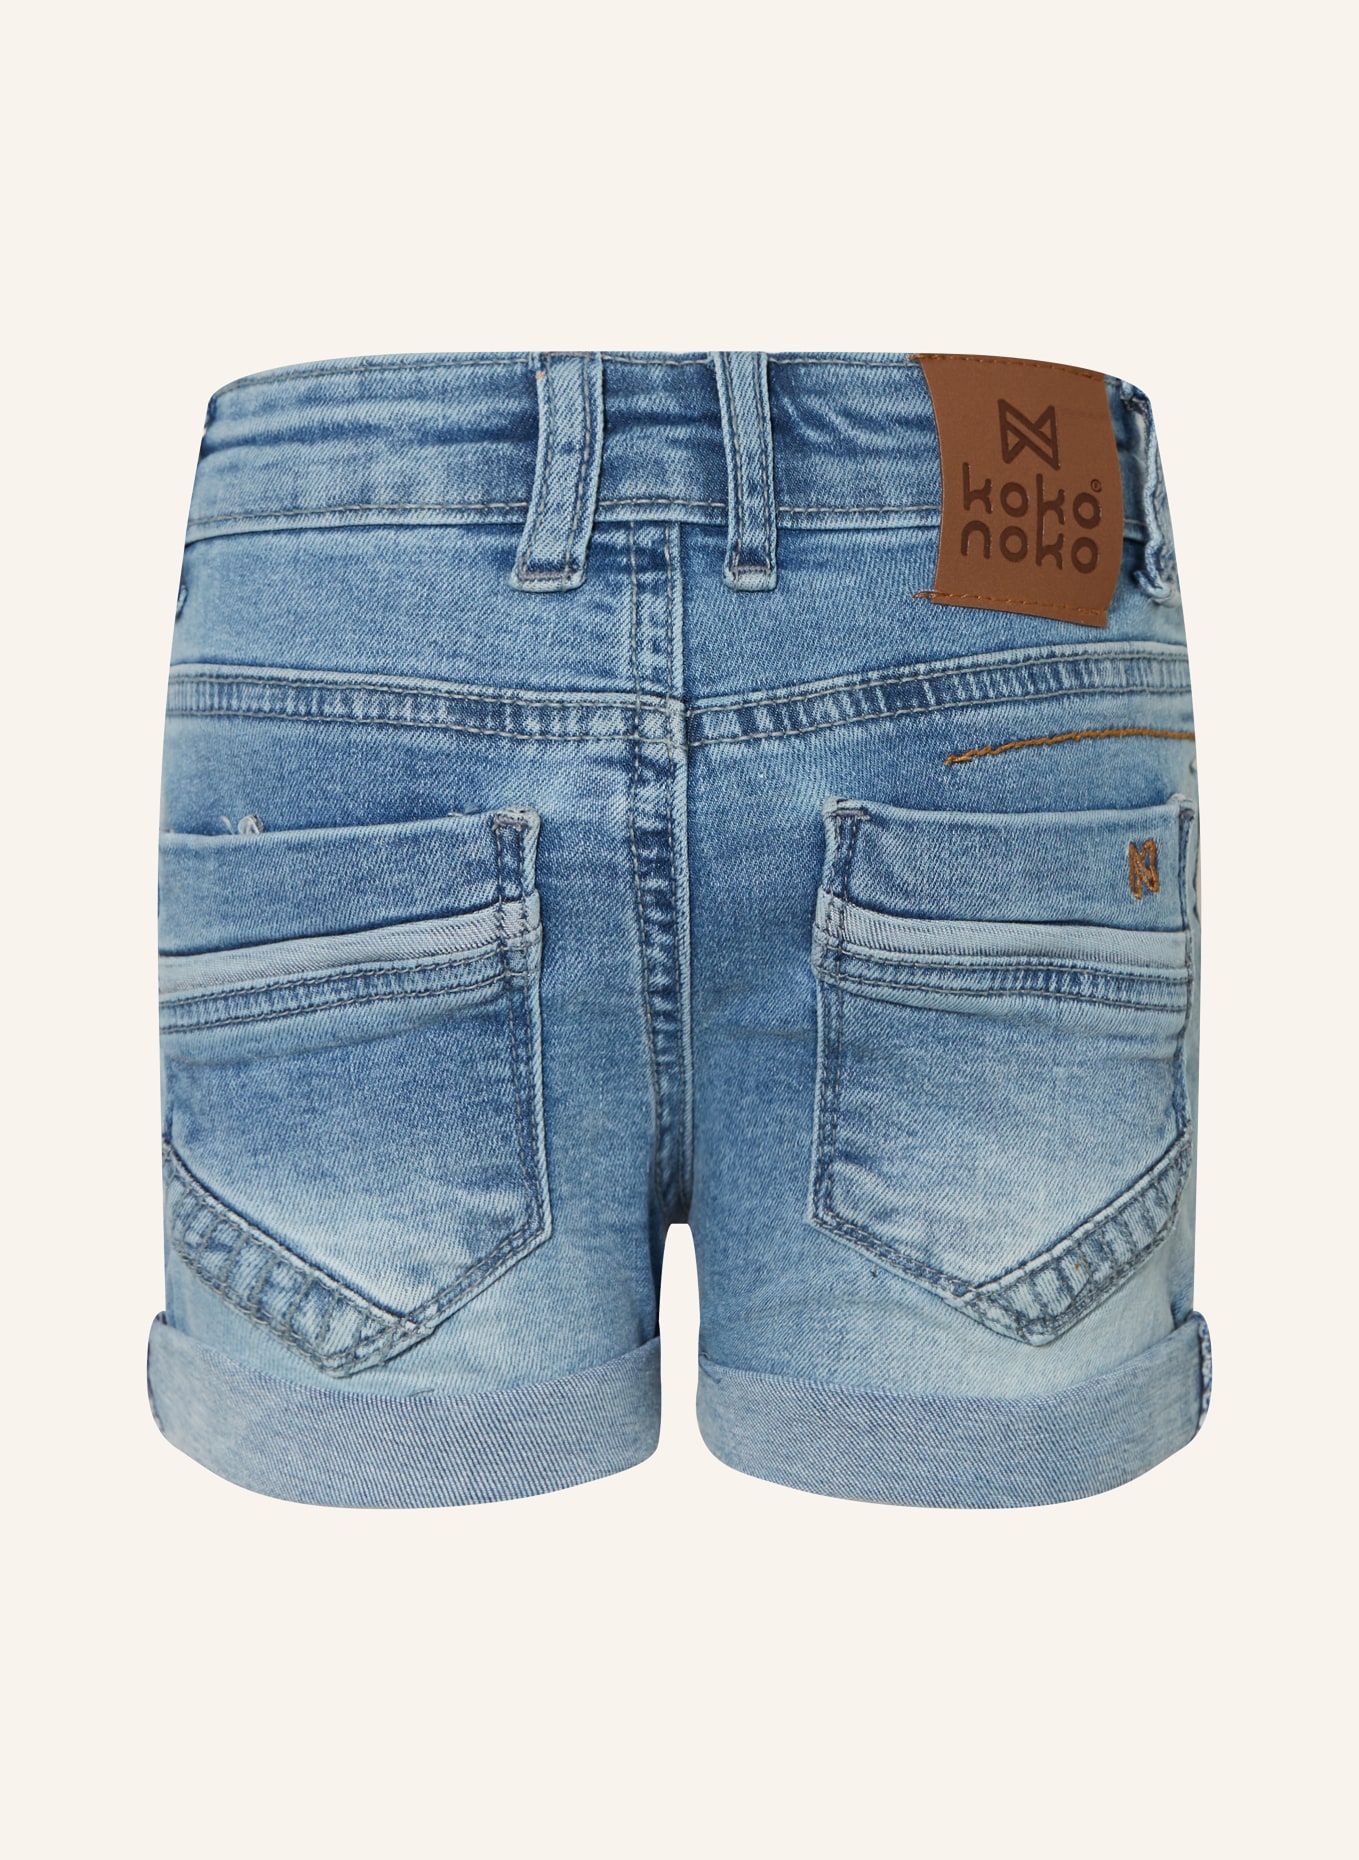 Koko Noko Jeansshorts, Farbe: blue jeans (Bild 2)